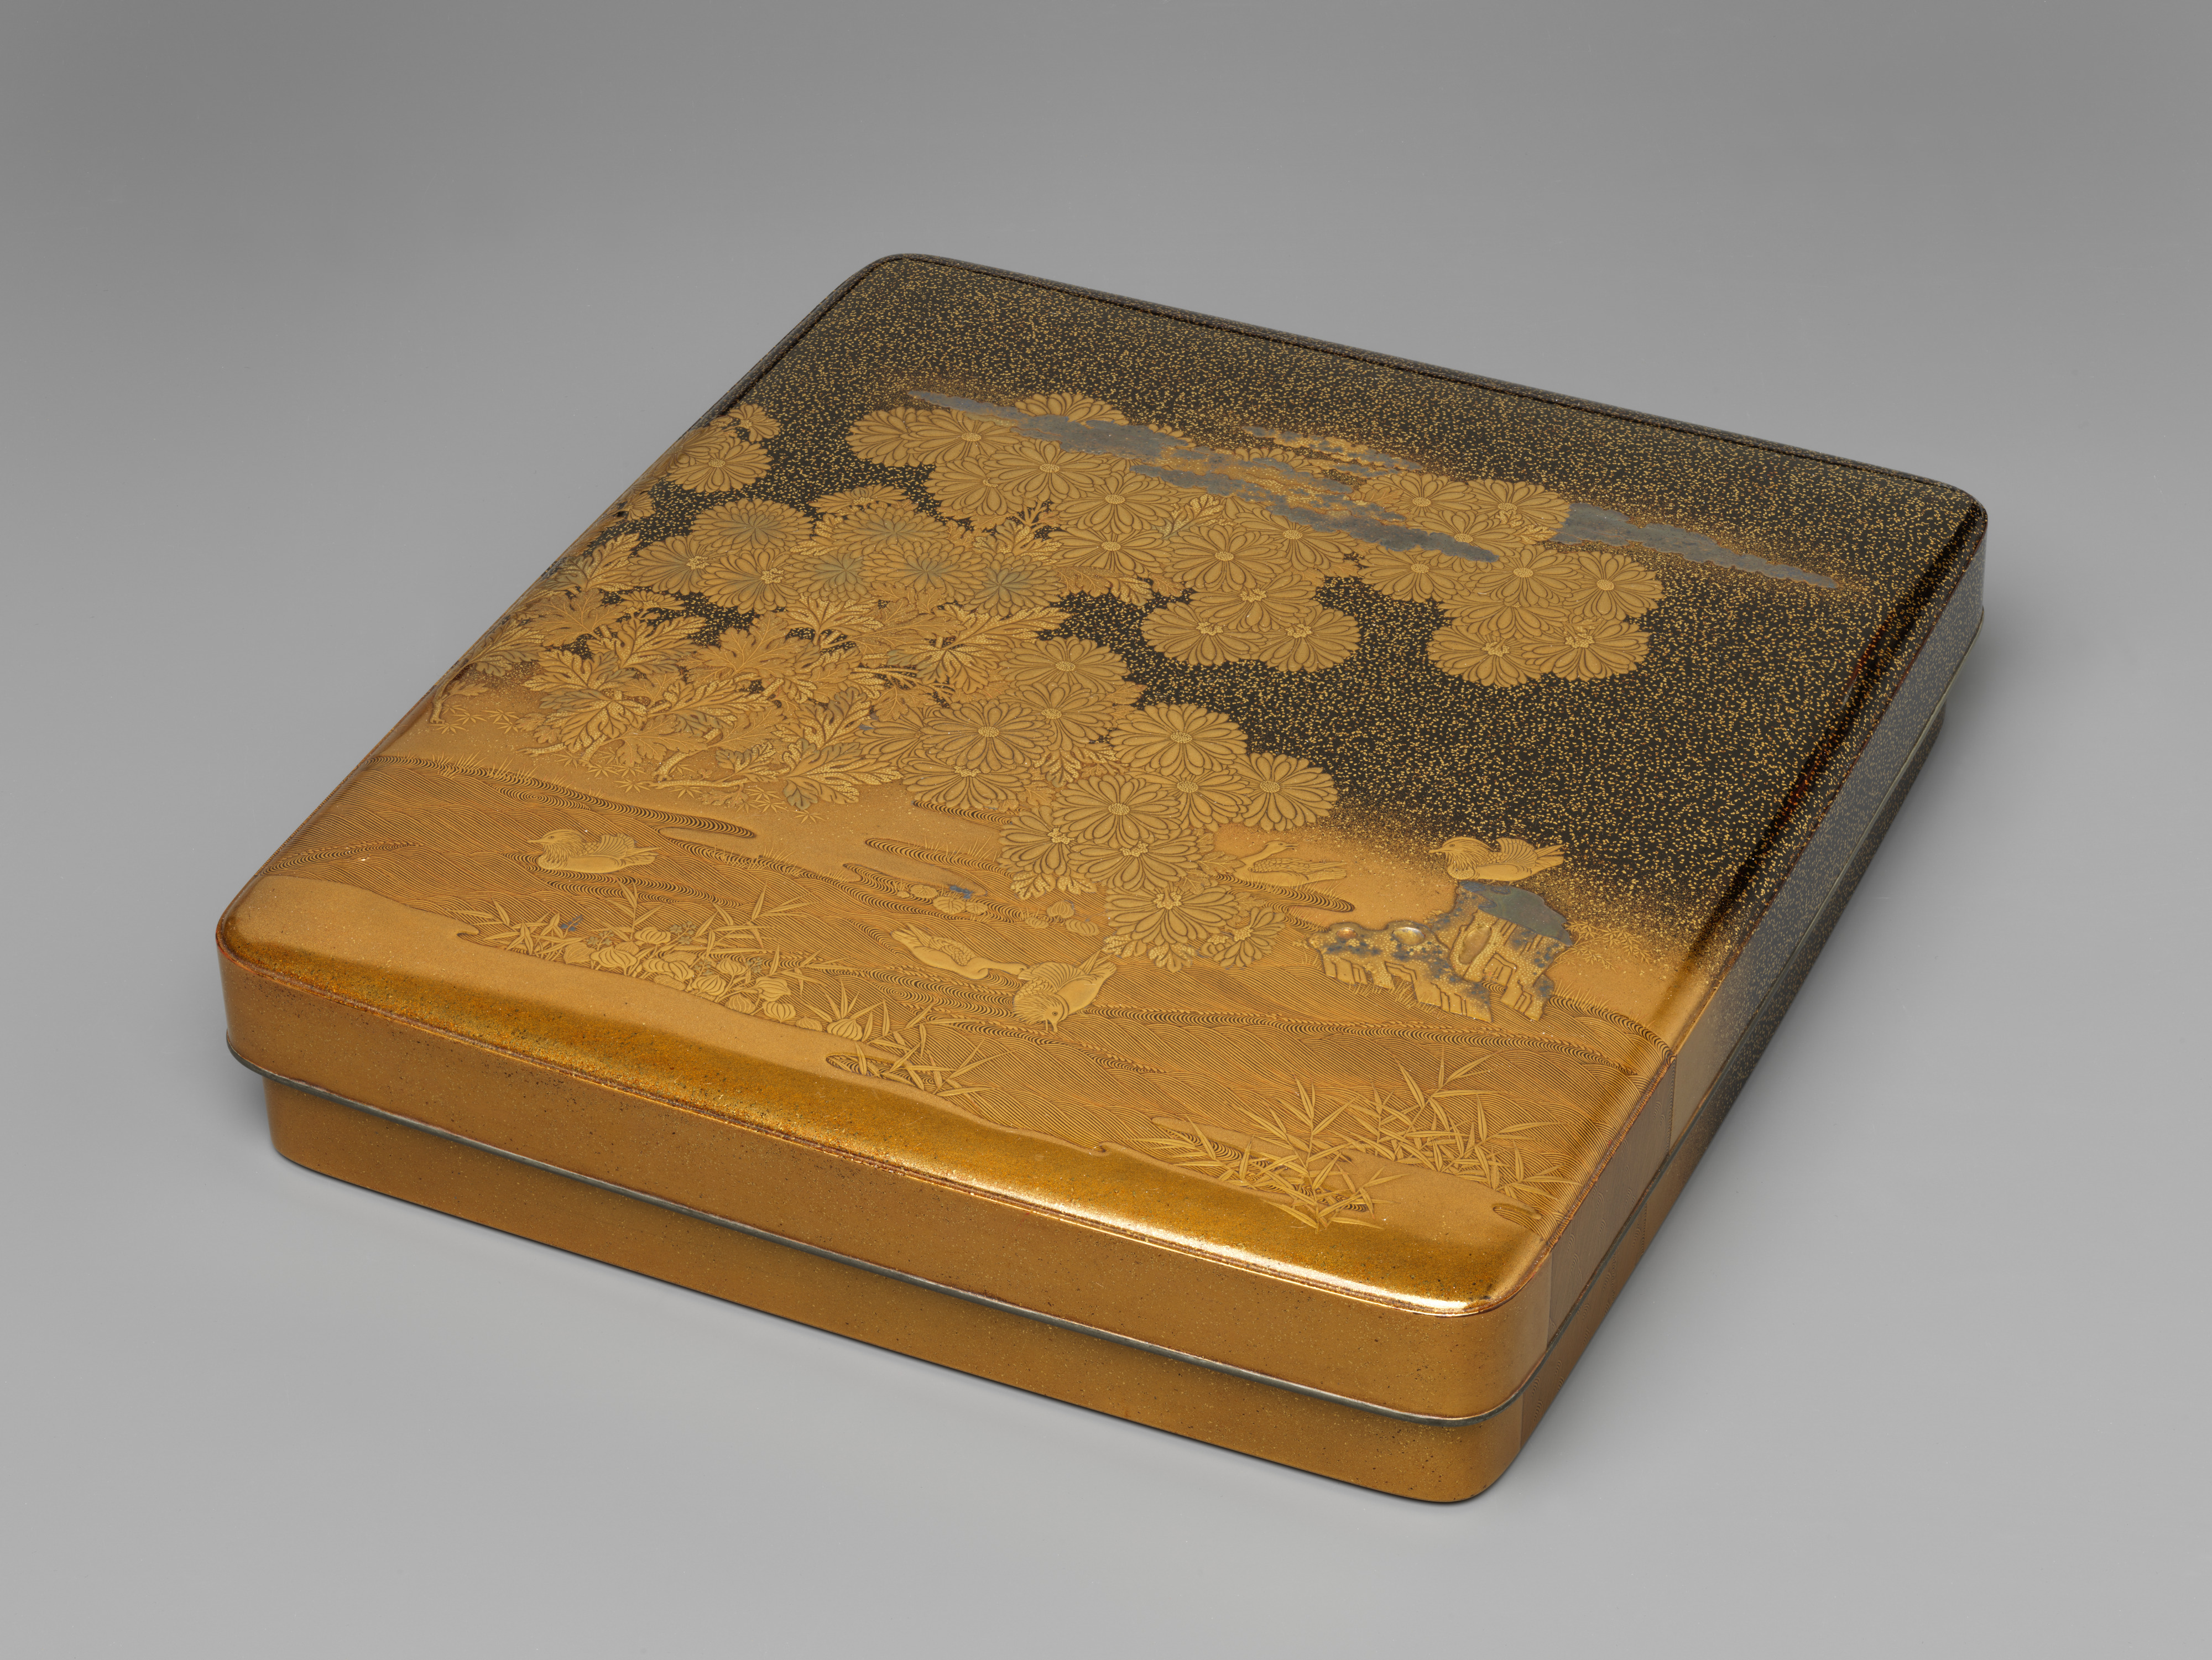 Japanese Writing Boxes, Essay, The Metropolitan Museum of Art